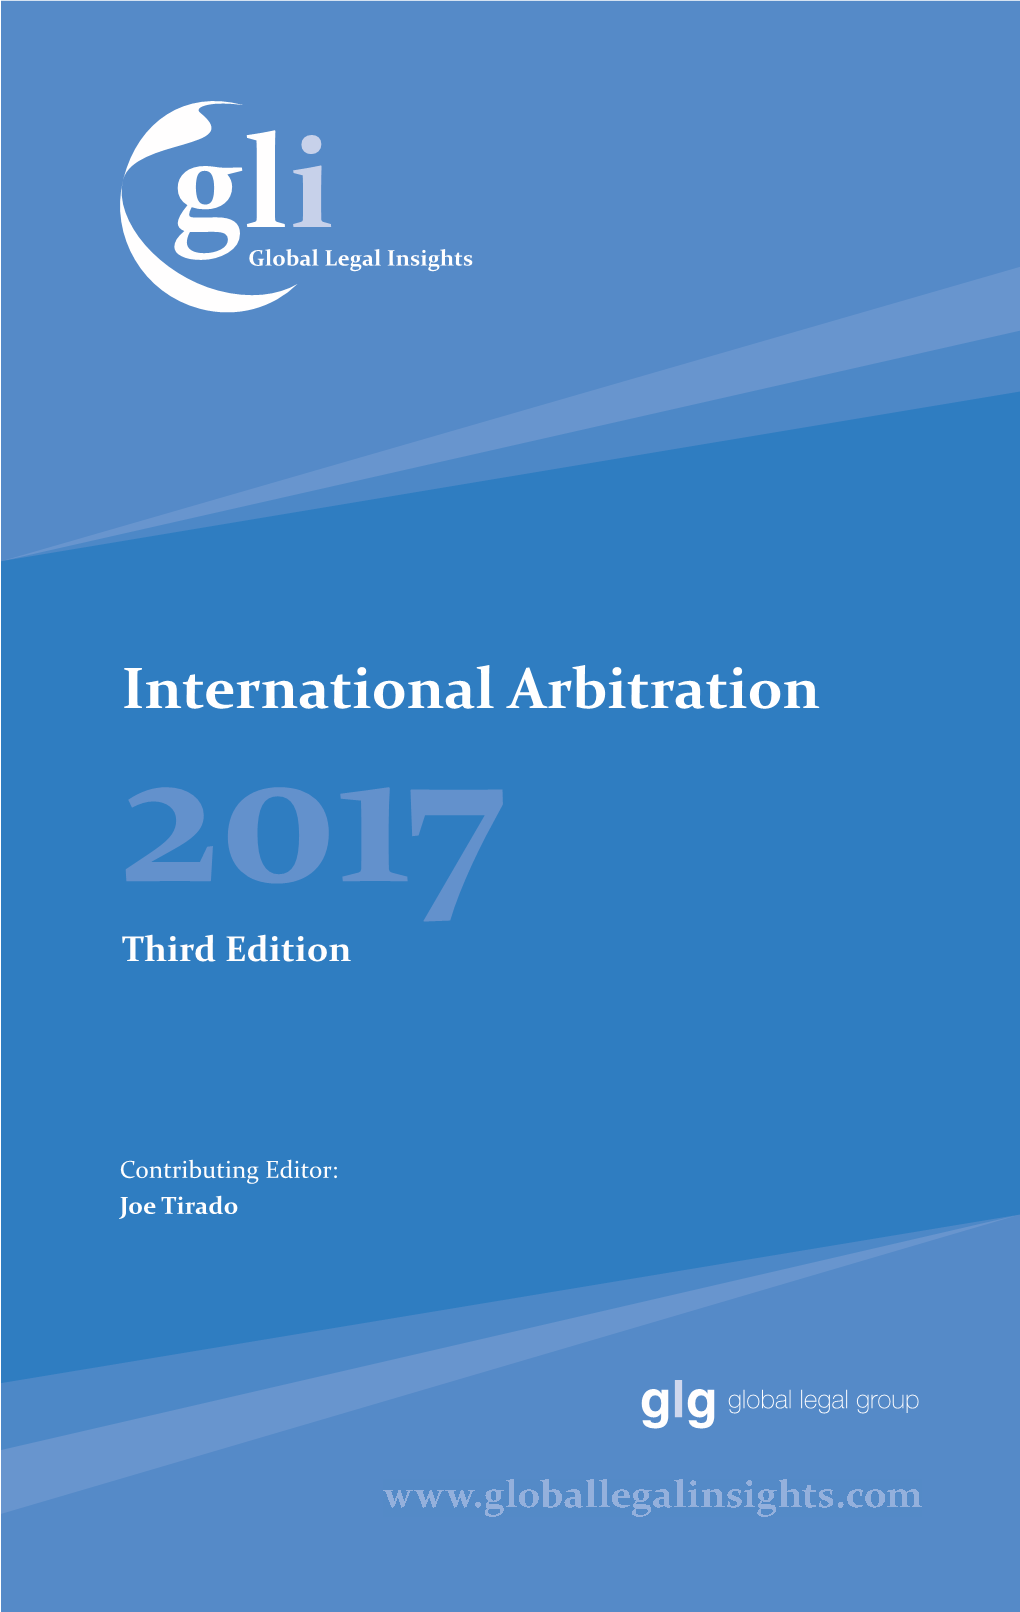 International Arbitration 2017 Third Edition